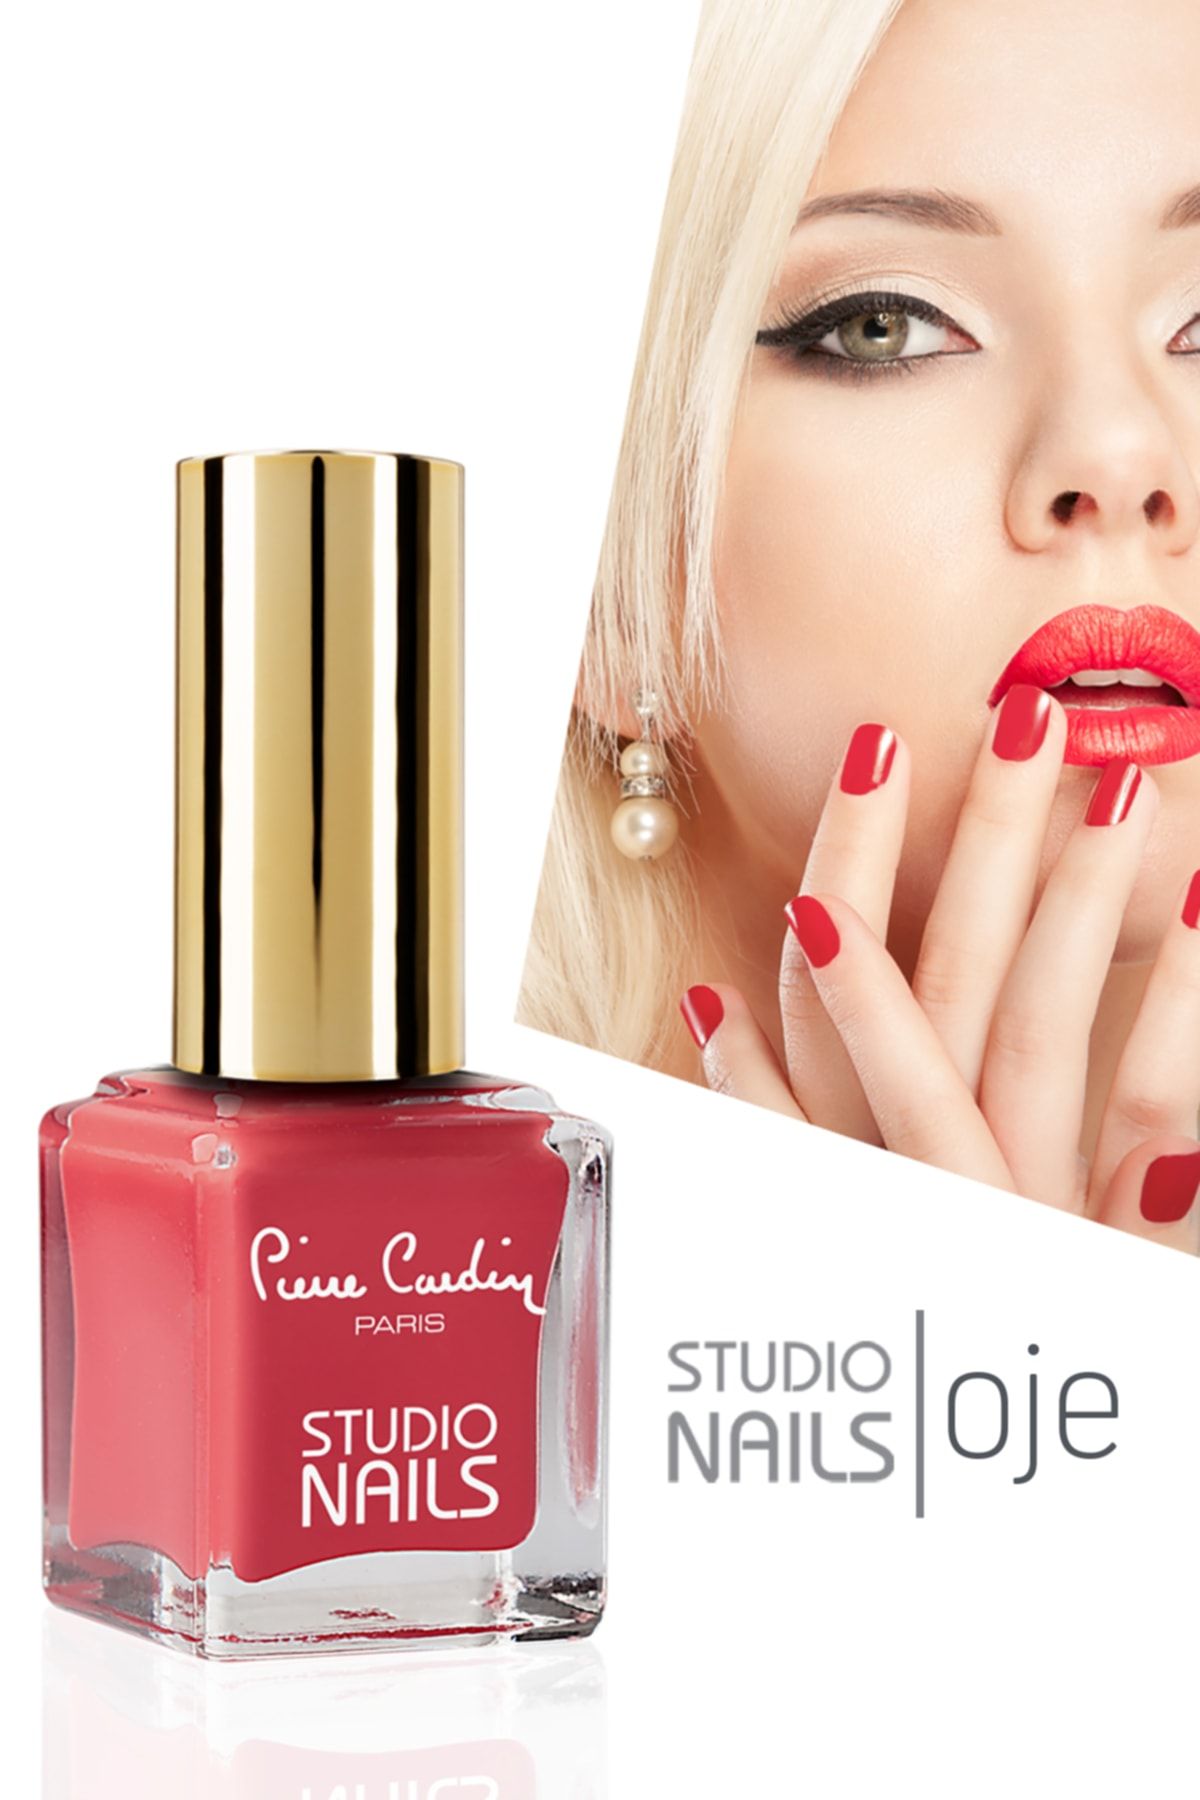 Pierre Cardin Studio Nails Oje - 058 14312